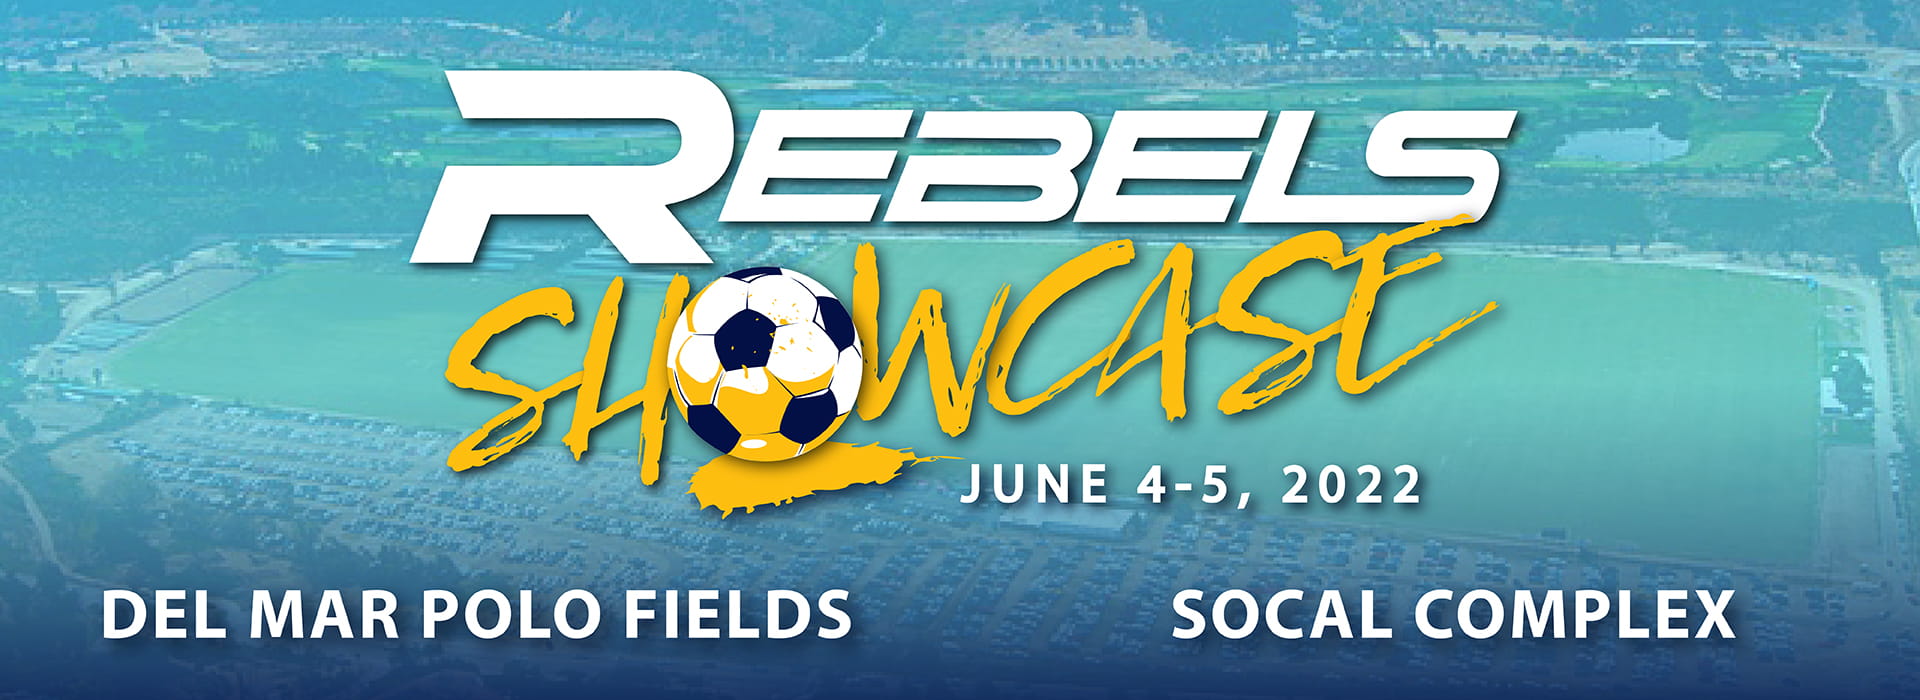 Rebels Showcase Rebels Soccer Club